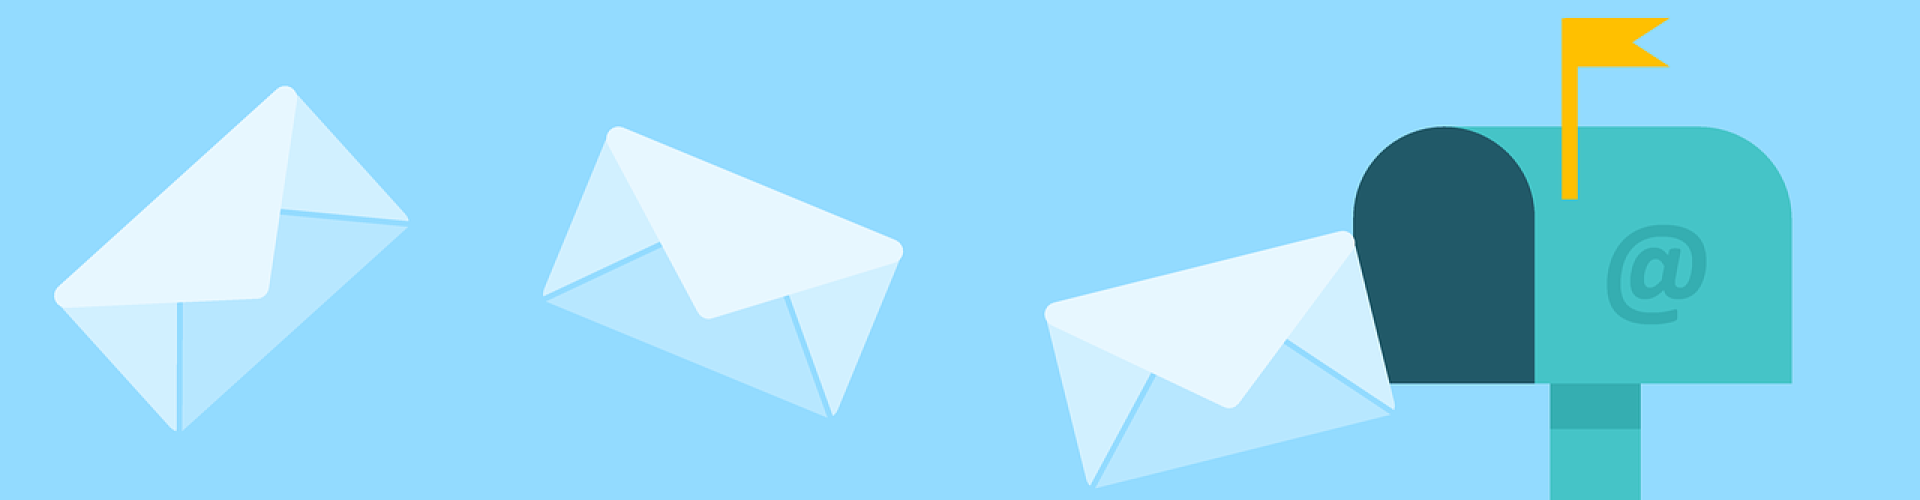 Nieuwsbrief-maken-in-outlook-mail-software-nieuwsbrief-nieuwsbrief-maken-voorbeeld-mailing-maken- email-marketing-strategie-nieuwsbrief-schrijven-nieuwsbrief-software-Enormail